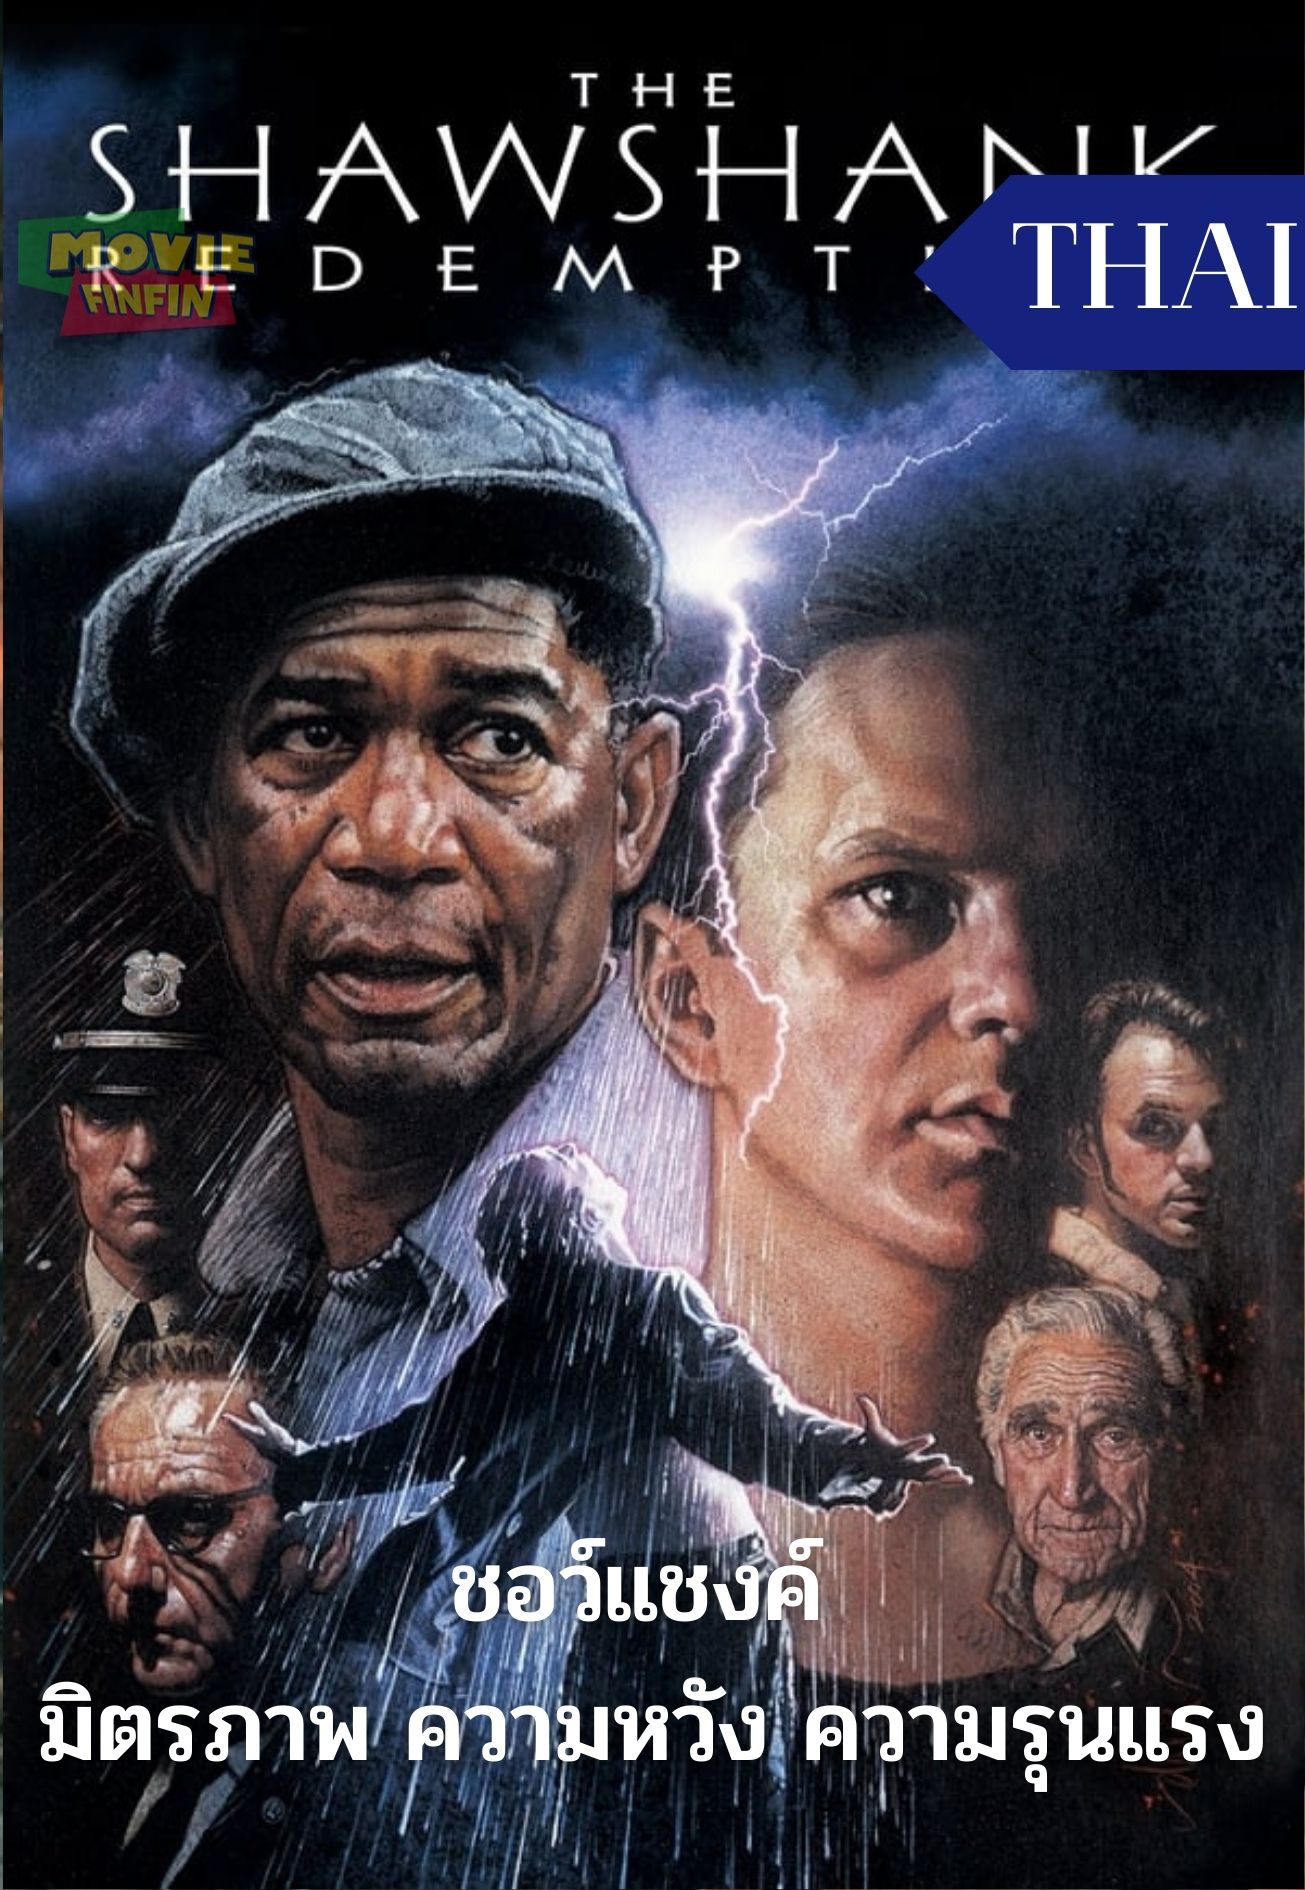 The Shawshank Redemption (1994) ชอว์แชงค์ มิตรภาพ ความหวัง ความรุนแรง 